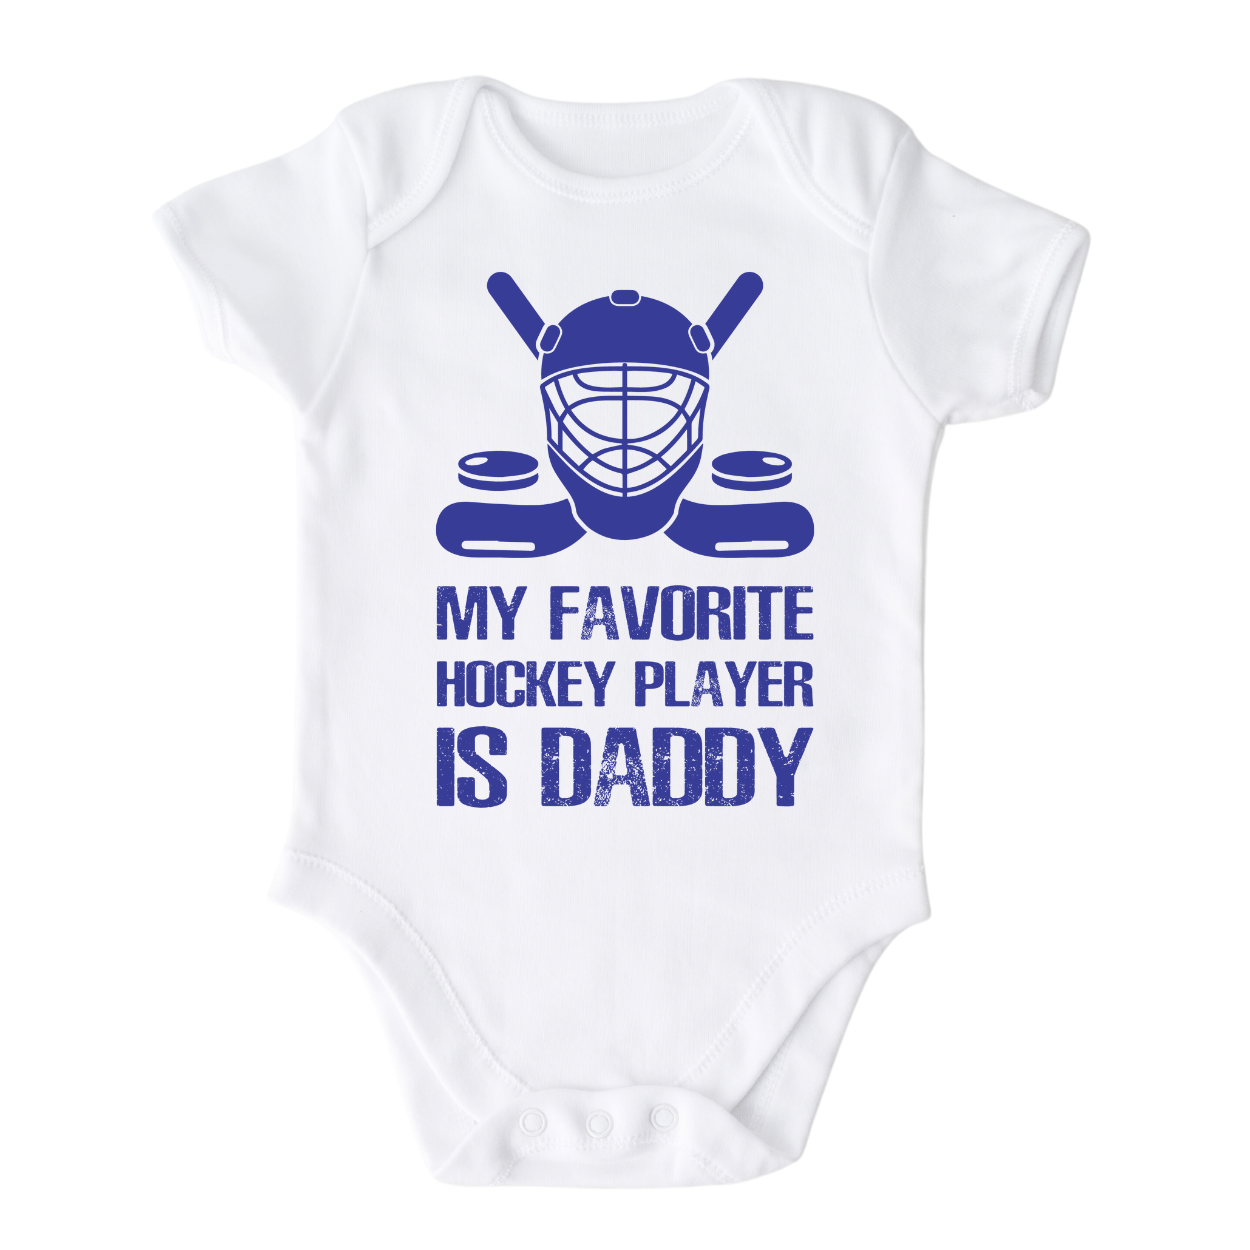 Baby Hockey Onesie